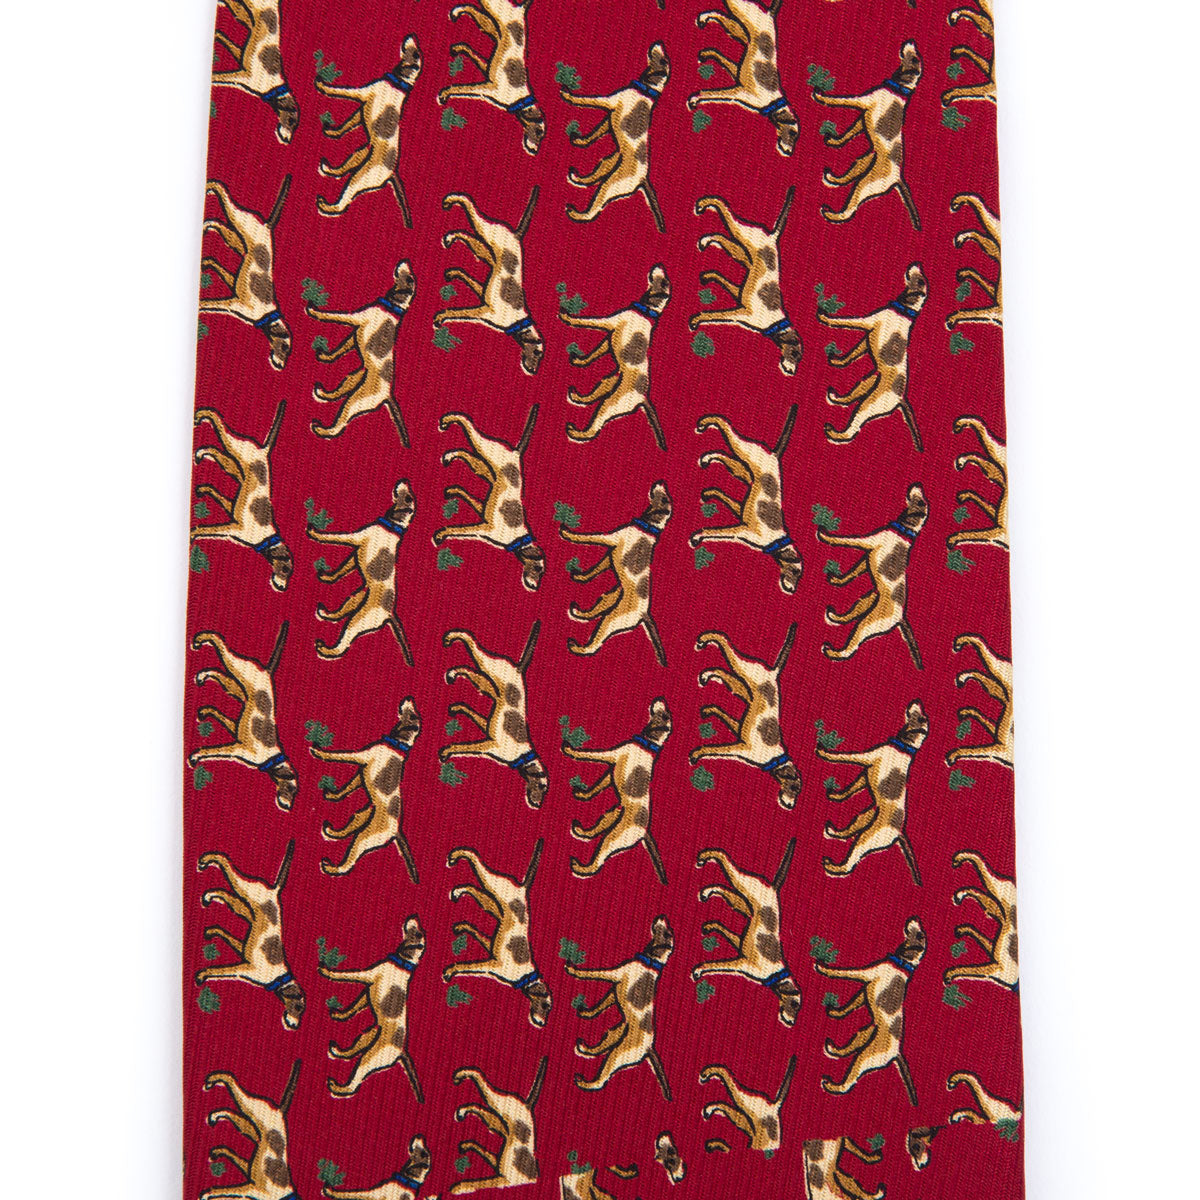 Canine fantasy tie